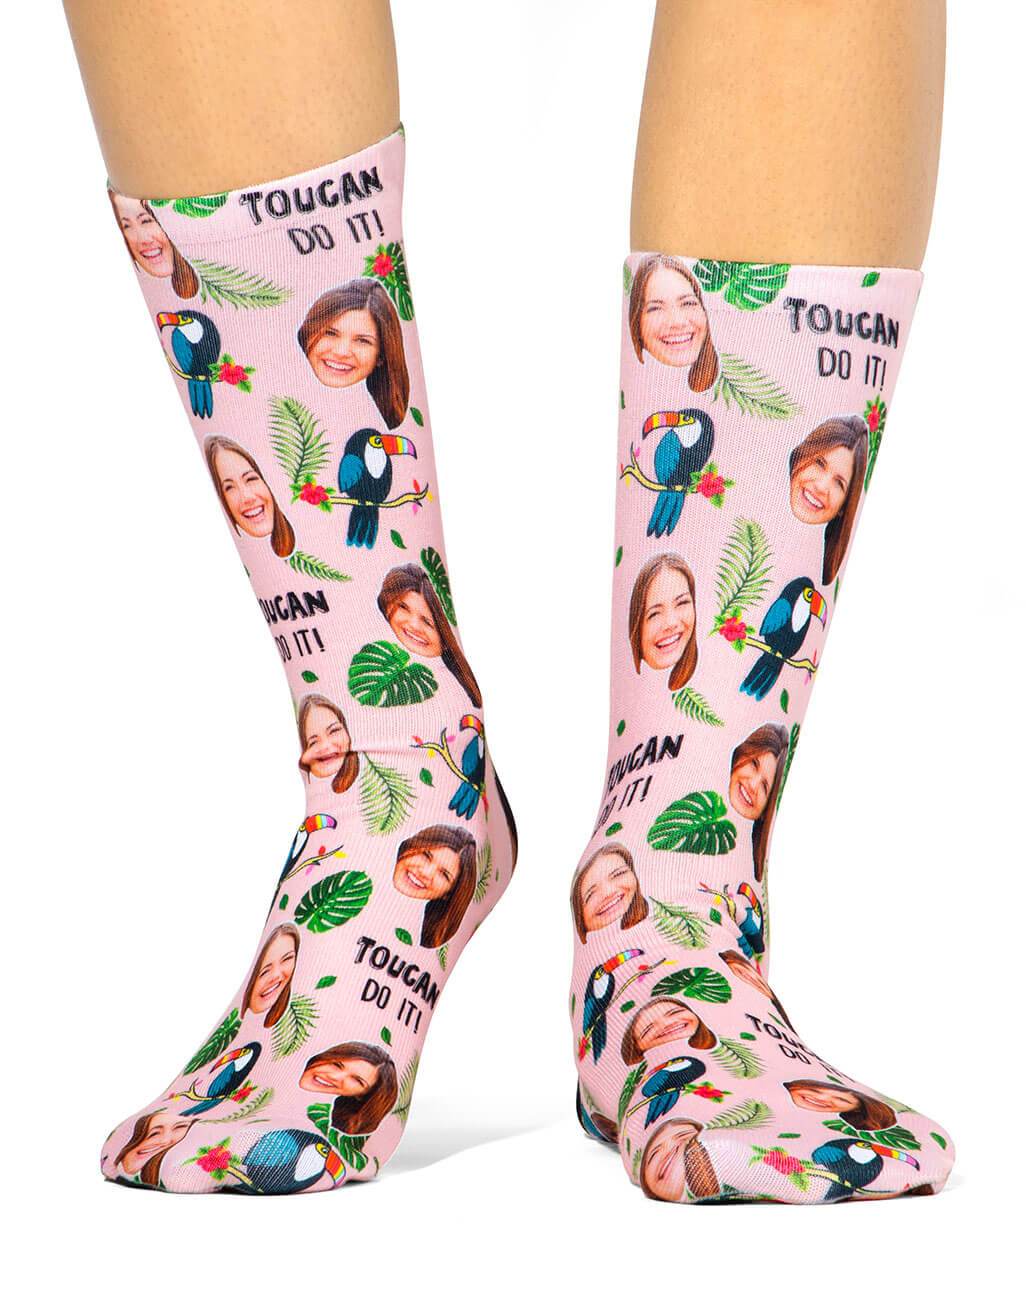 Toucan Do It! Custom Socks